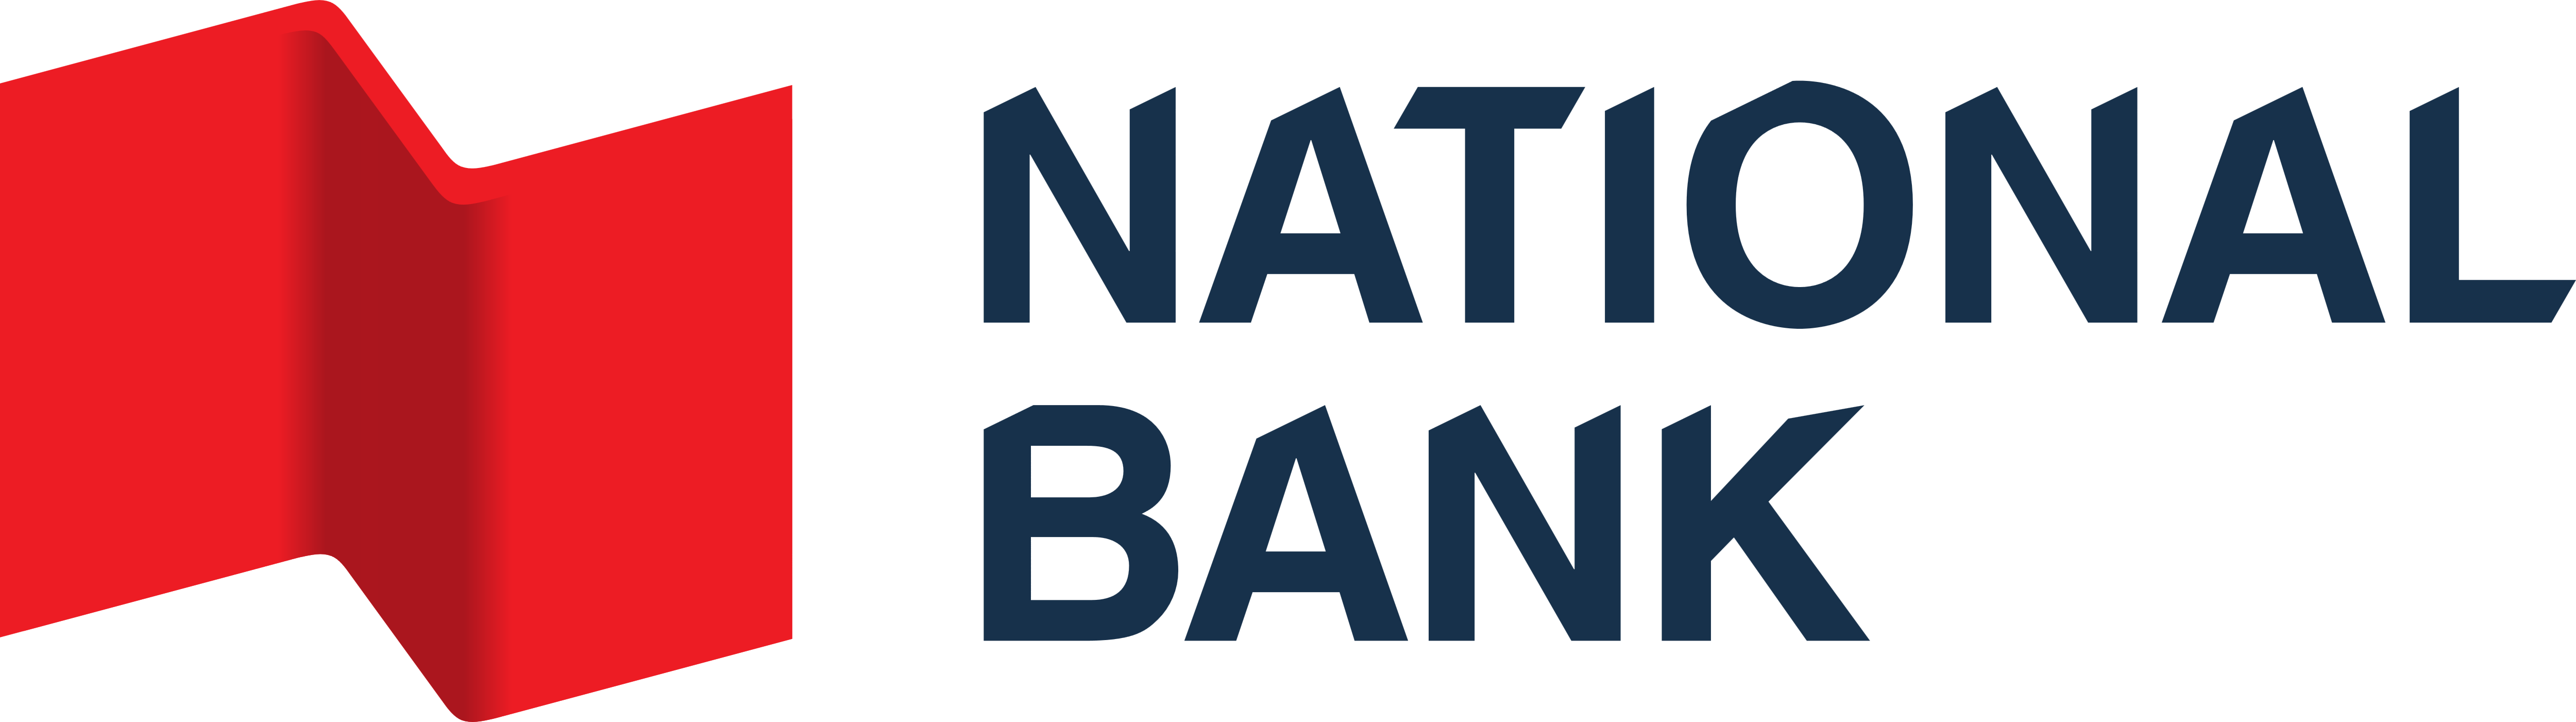 National Bank of Canada â€“ Logos Download